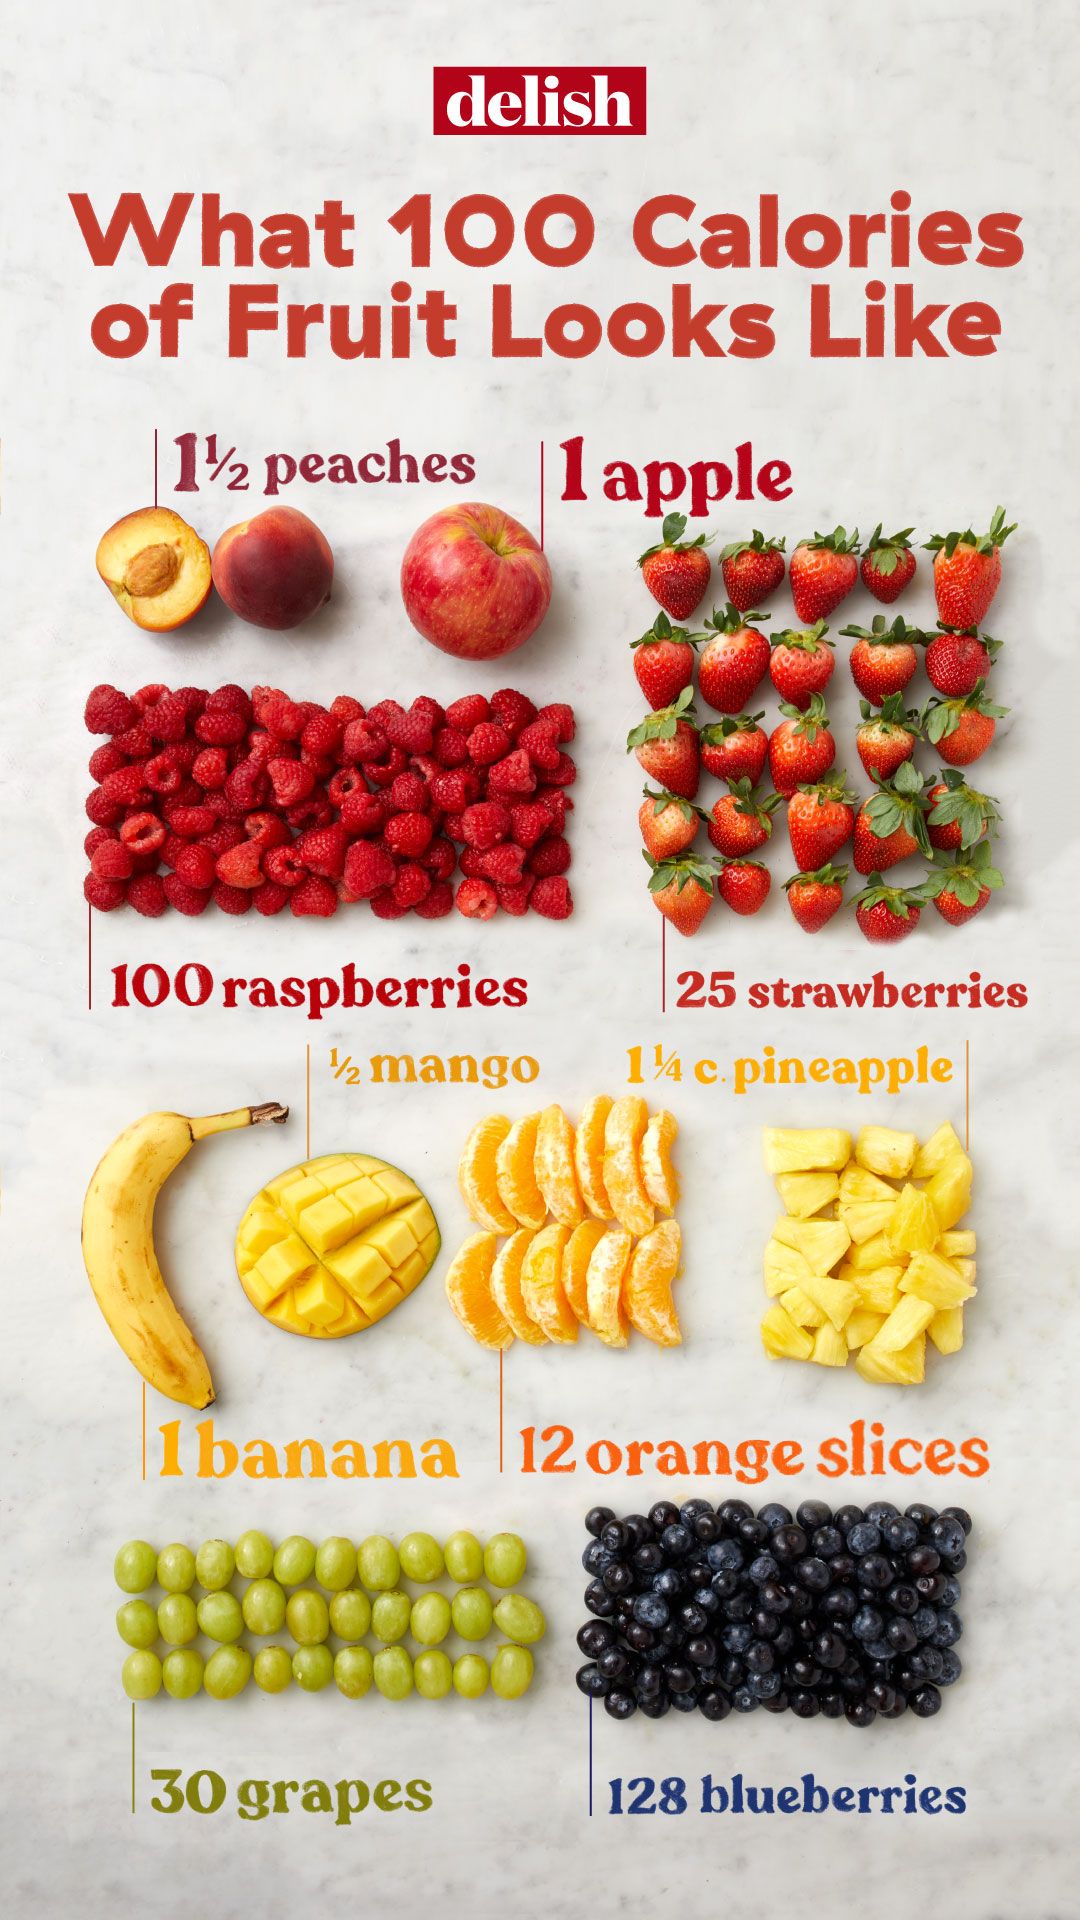 Calories Per Fruit Chart